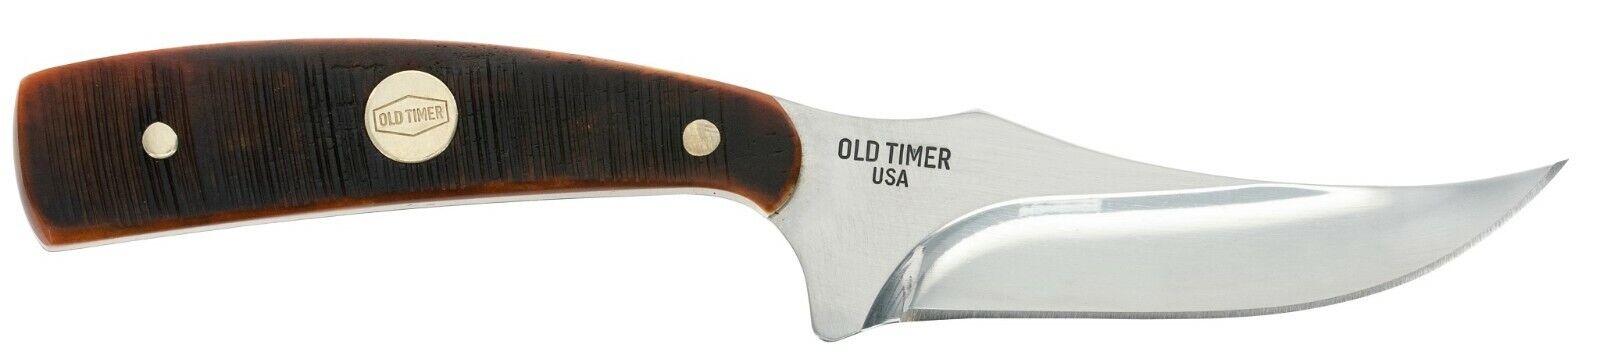 Schrade Old Timer 1135991 Generational USA Sharpfinger 152OTG